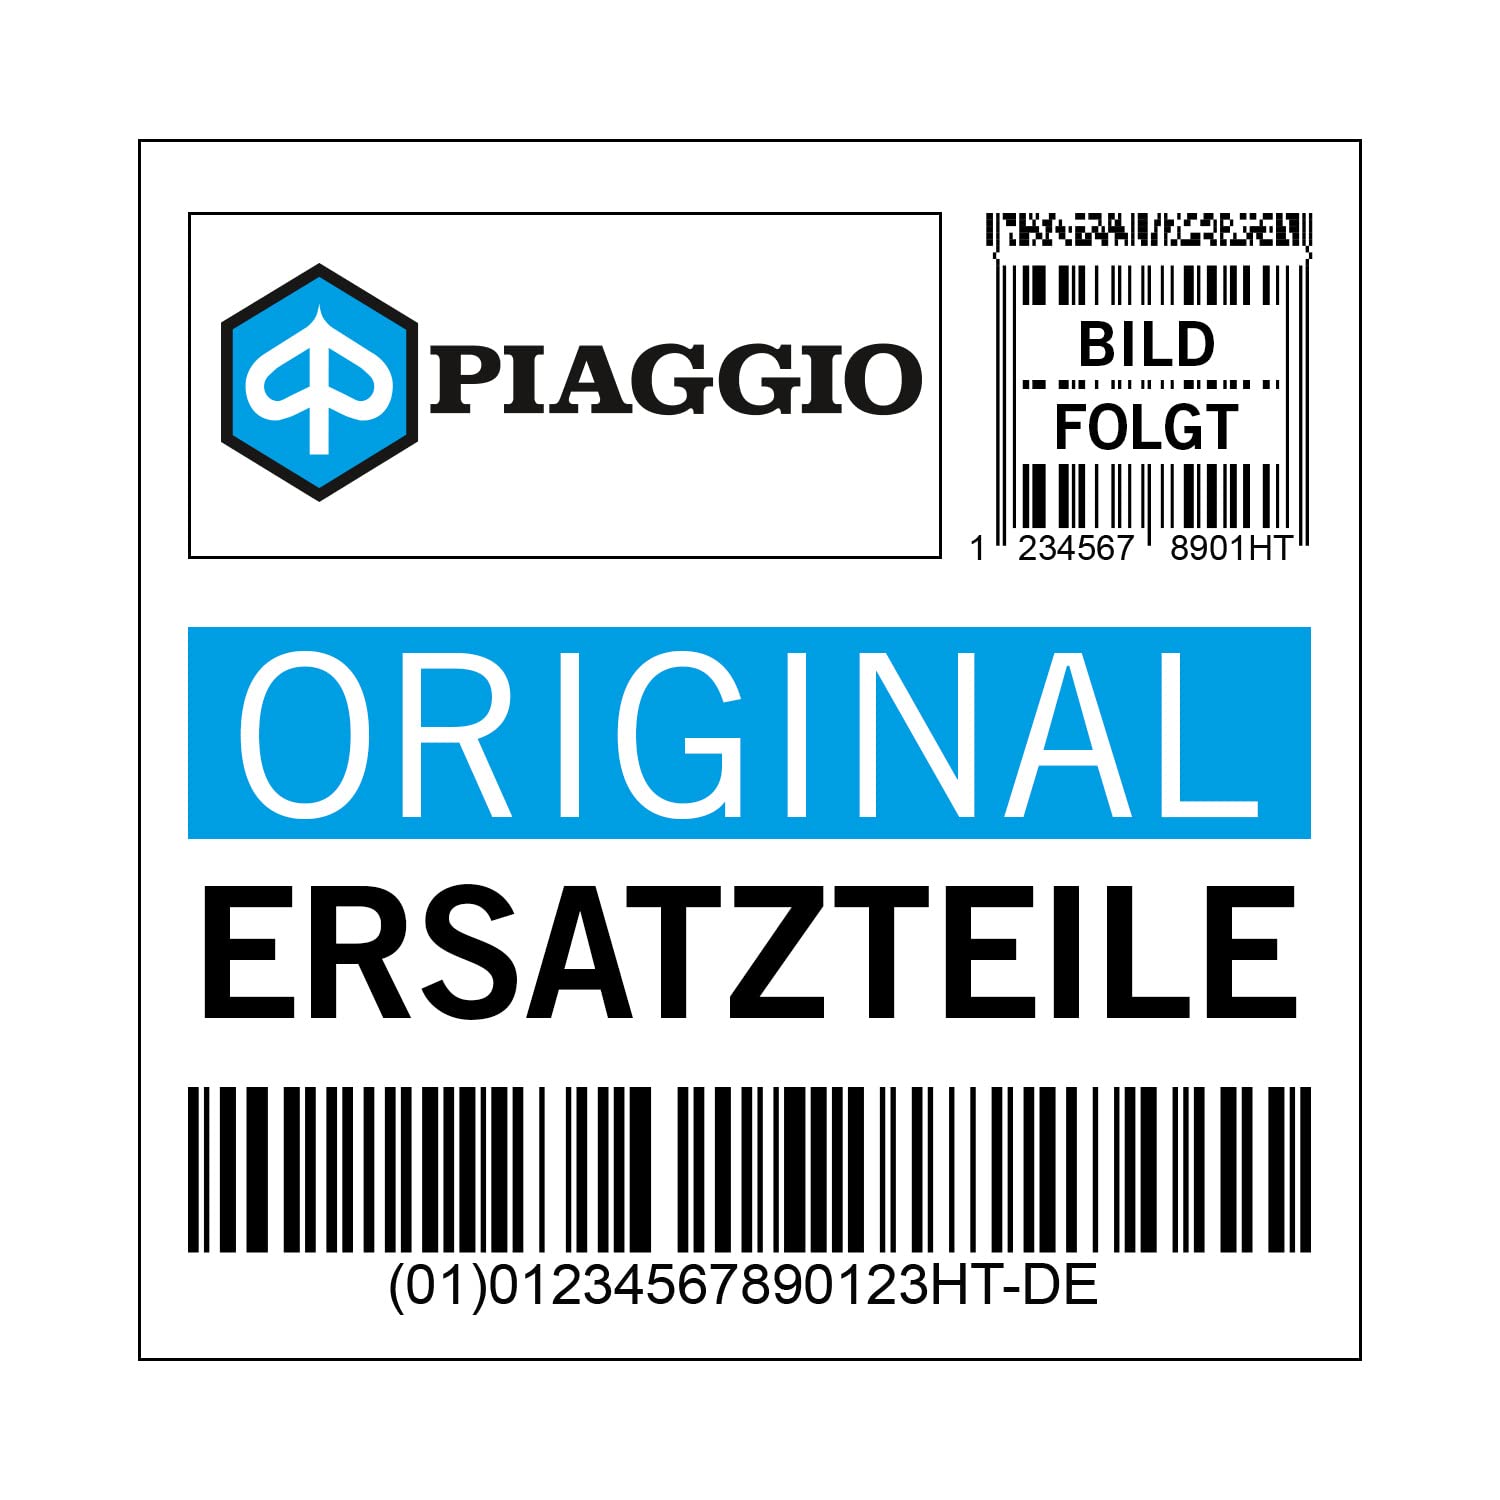 Deckel Piaggio Seitendeckel, links, grau, B8 ghiaccm io 705/A für Ice, CM01100100B8 von Maxtuned